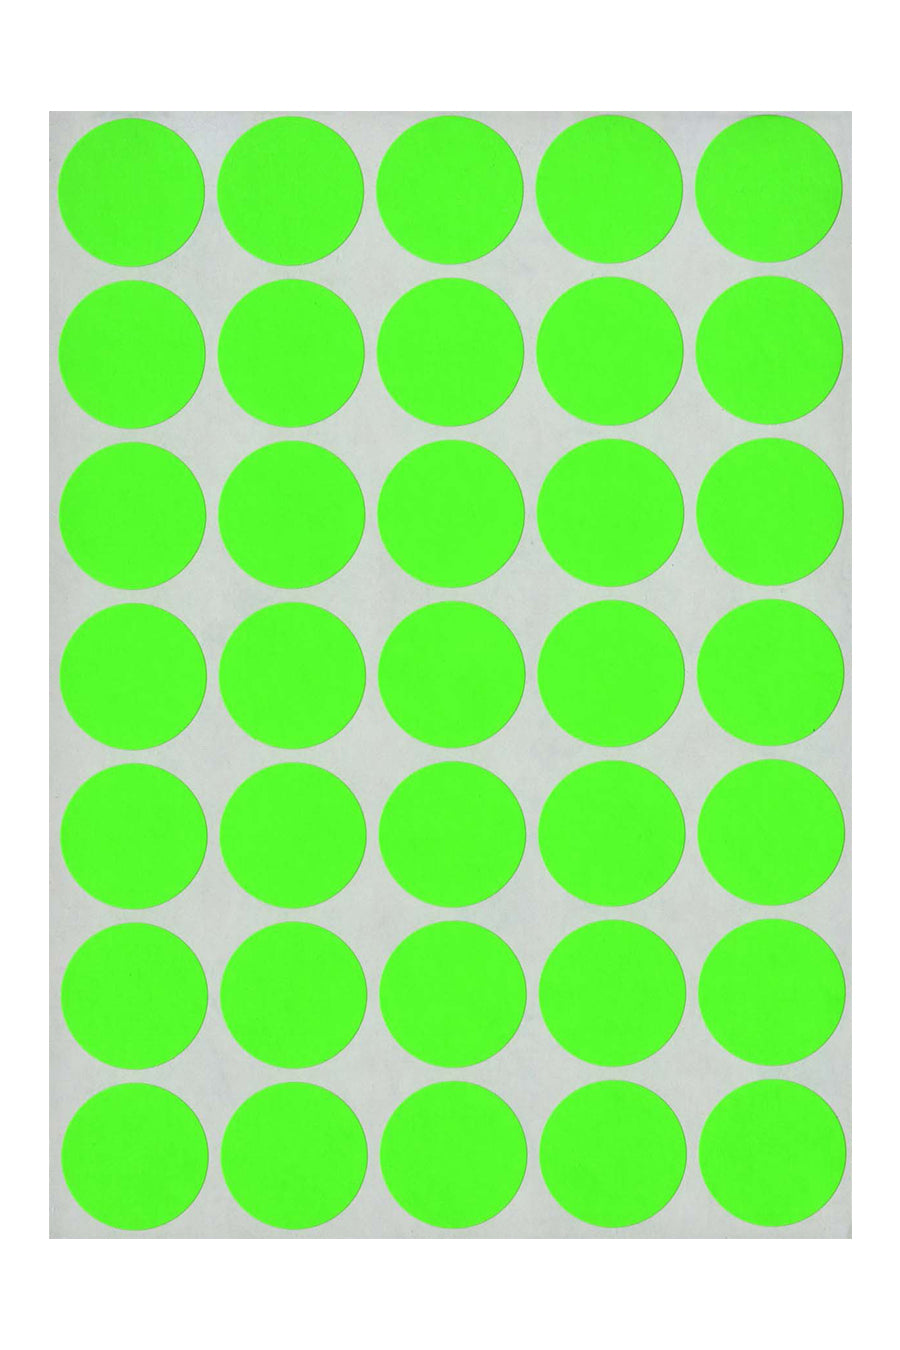 3/4" Dia. Color Coding Labels, Green Neon, 1000/Bx